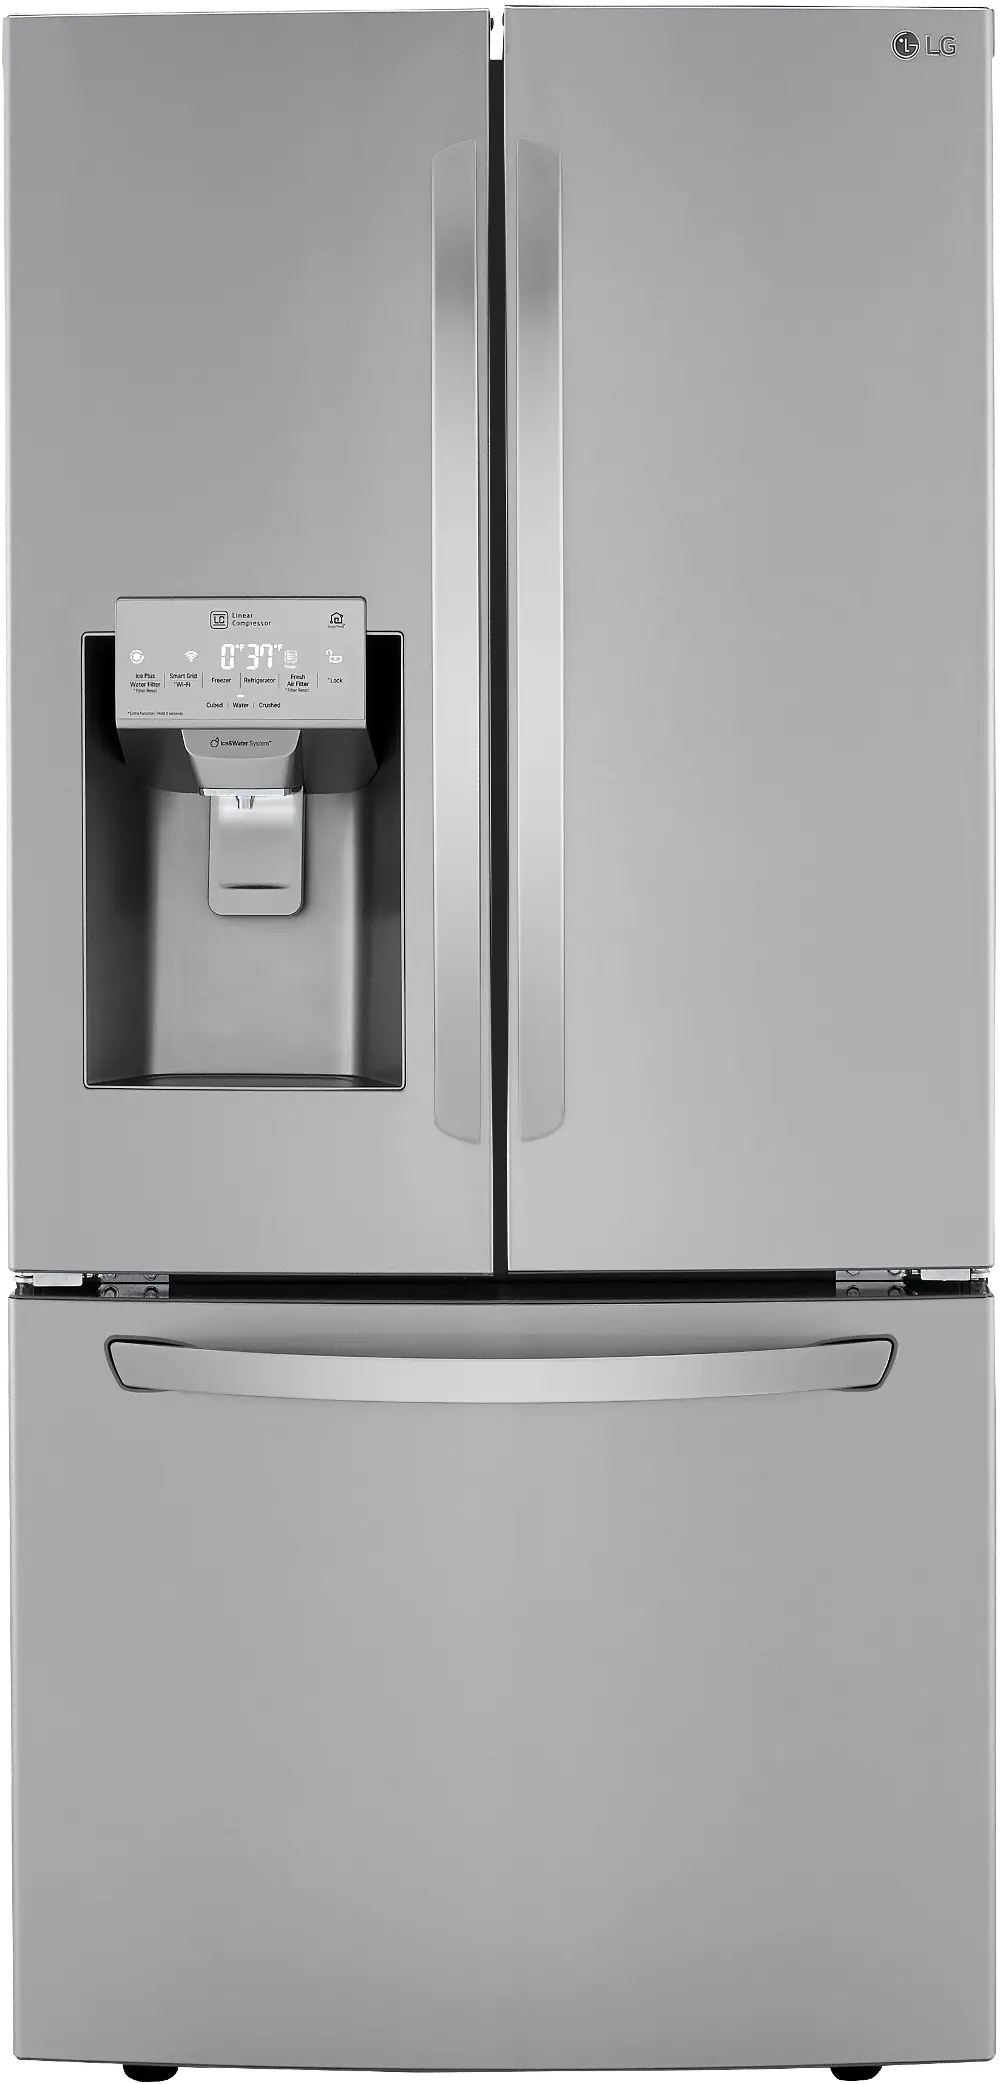 LRFXS2503S LG 24.5 cu ft French Door Refrigerator - 33 W Stainless Steel-1